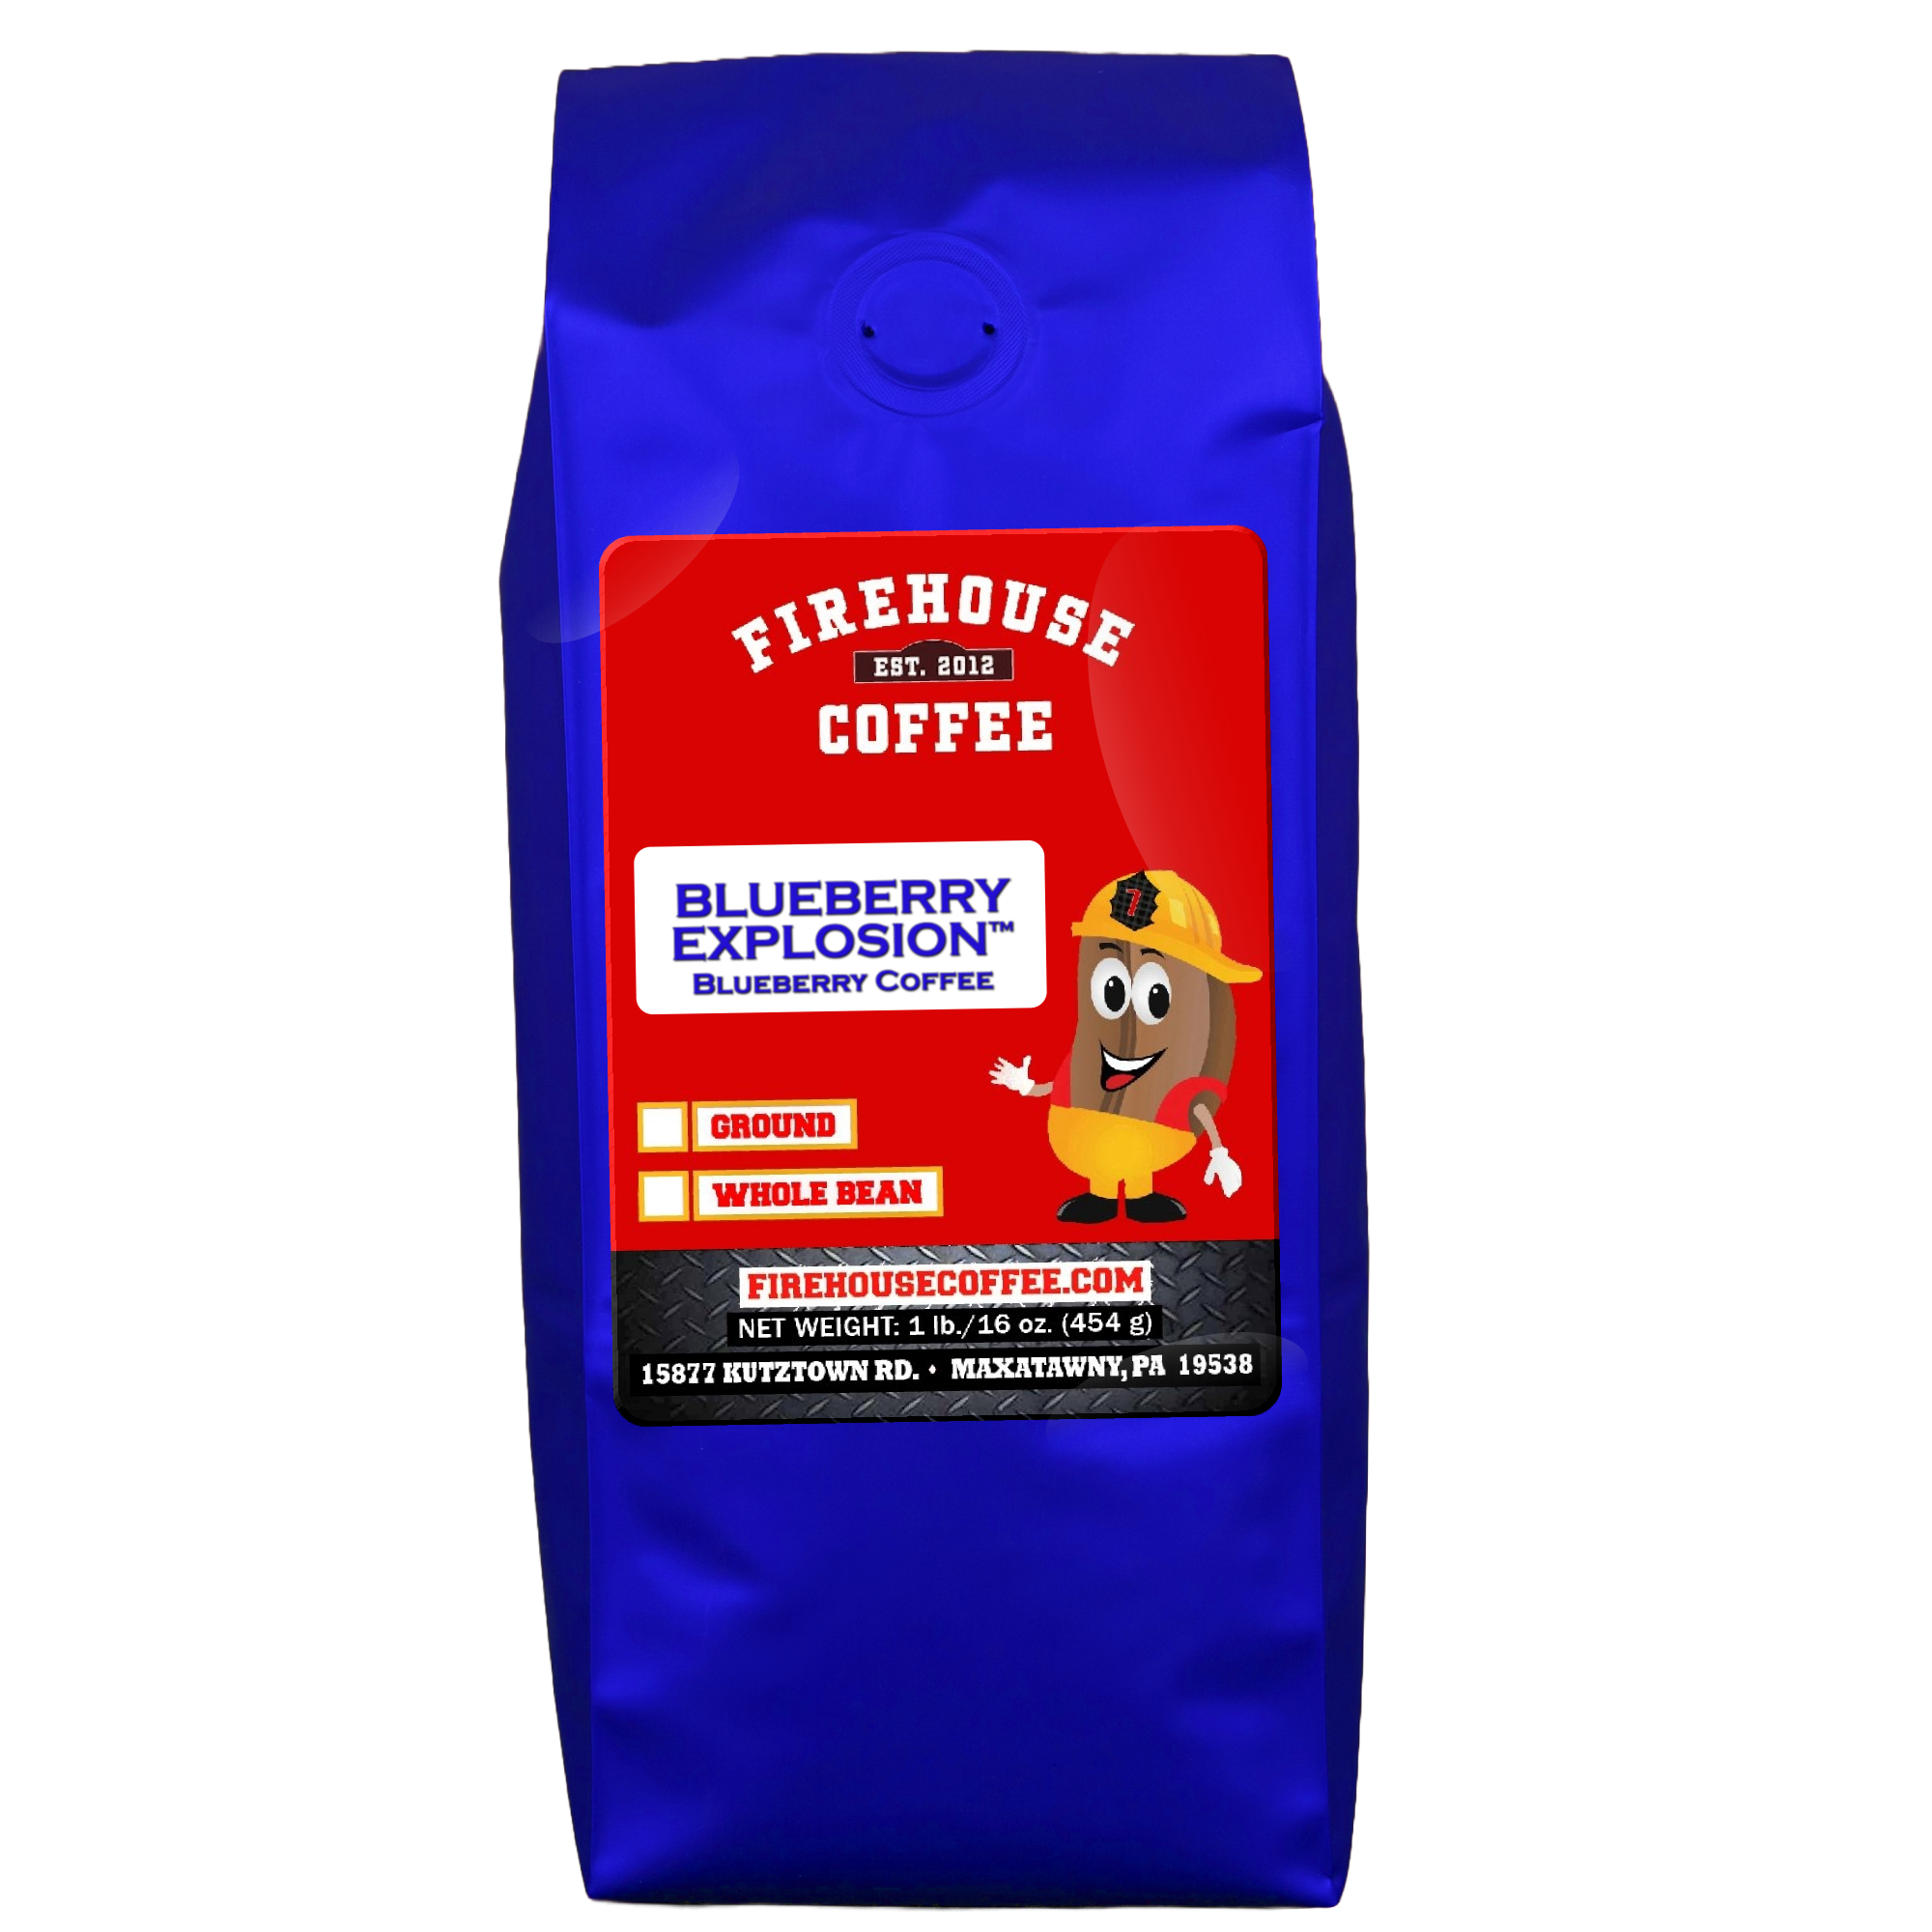 16 oz bag of Blueberry Coffee